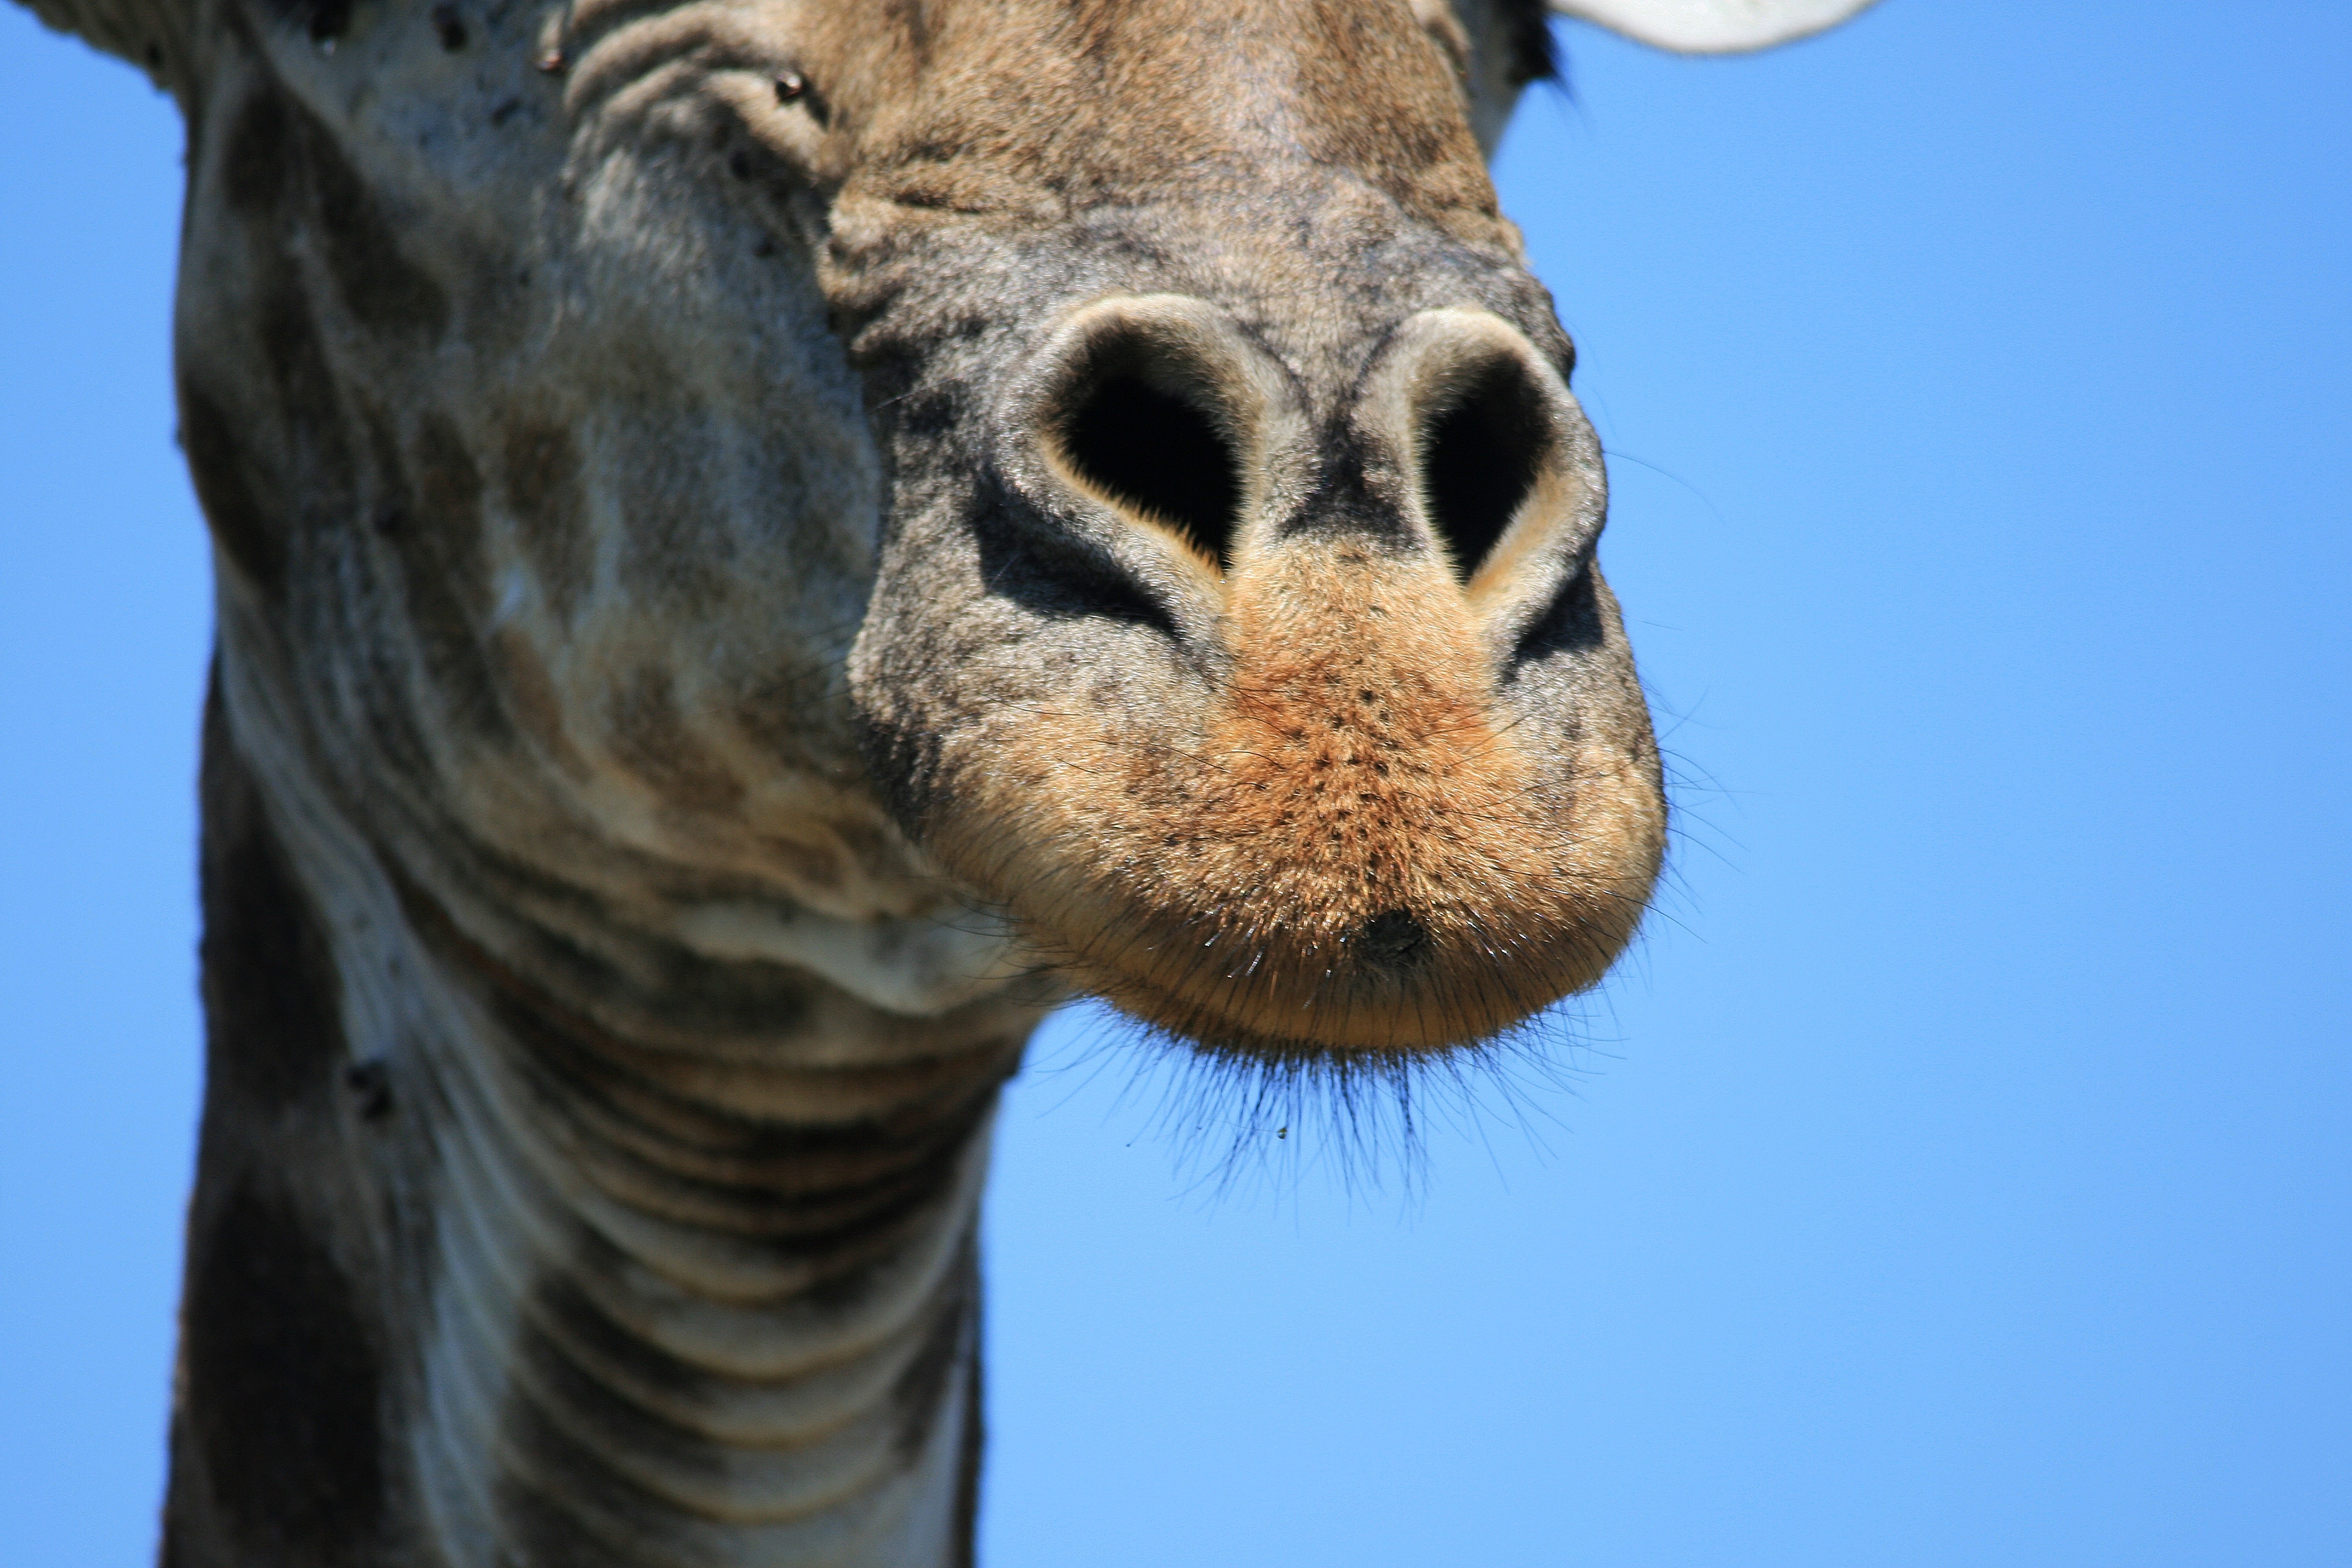 giraffe's nose